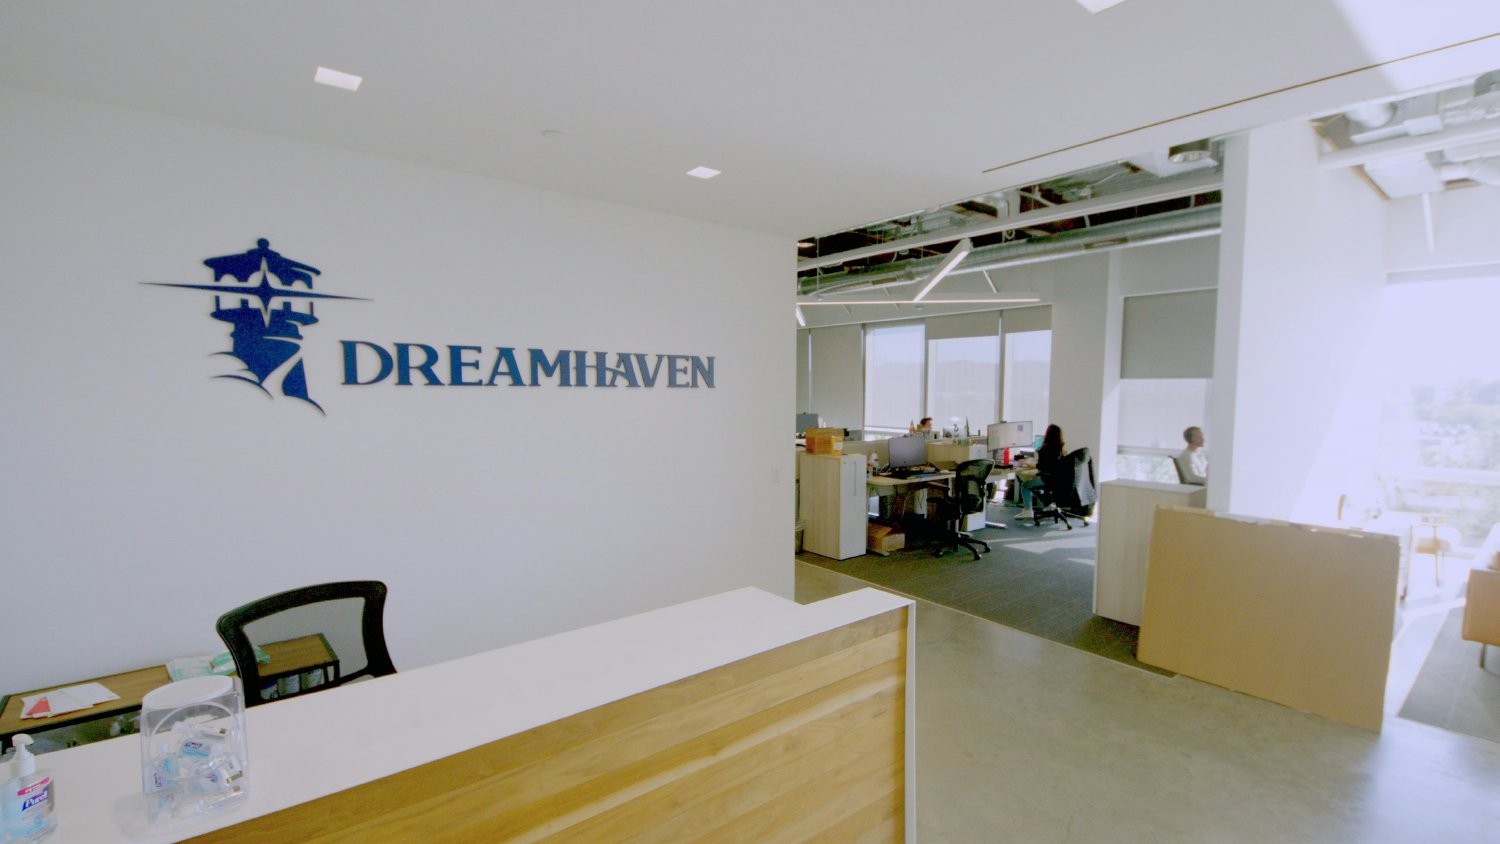 Dreamhaven Office - Reception Area